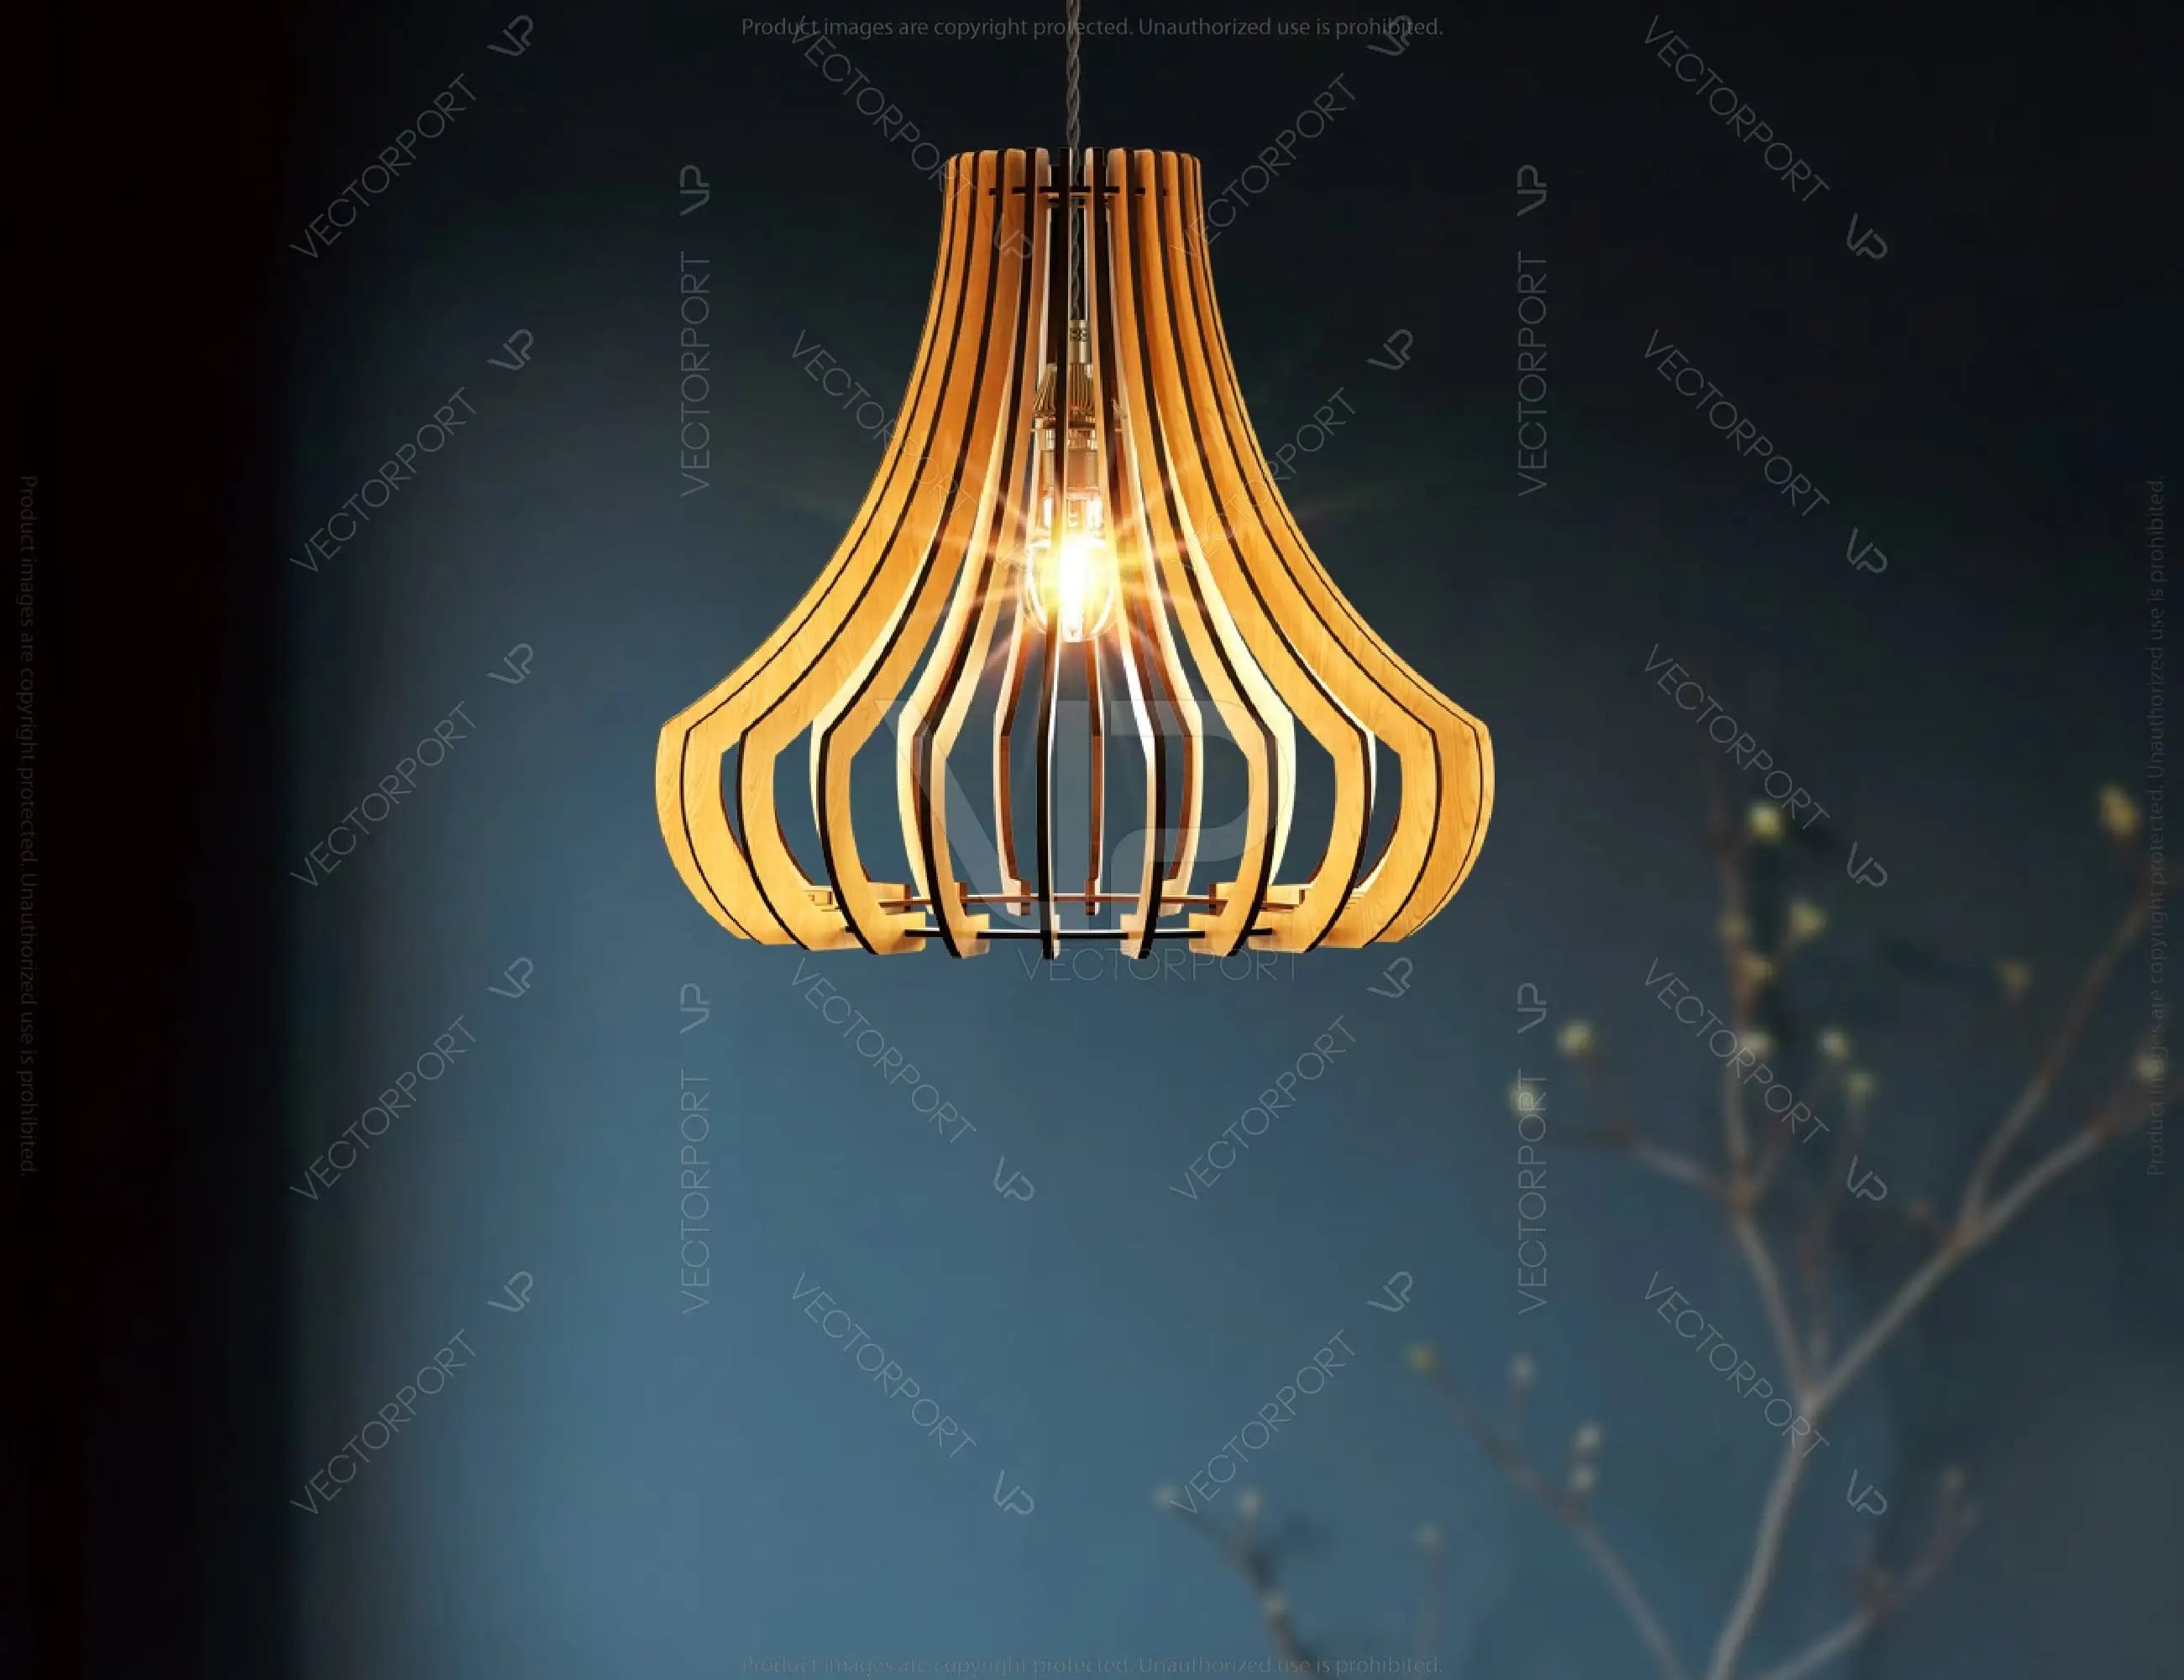 Round Modern Wood Pendant Light Chandelier Lamp lampshade plywood Cut Files |#U031|